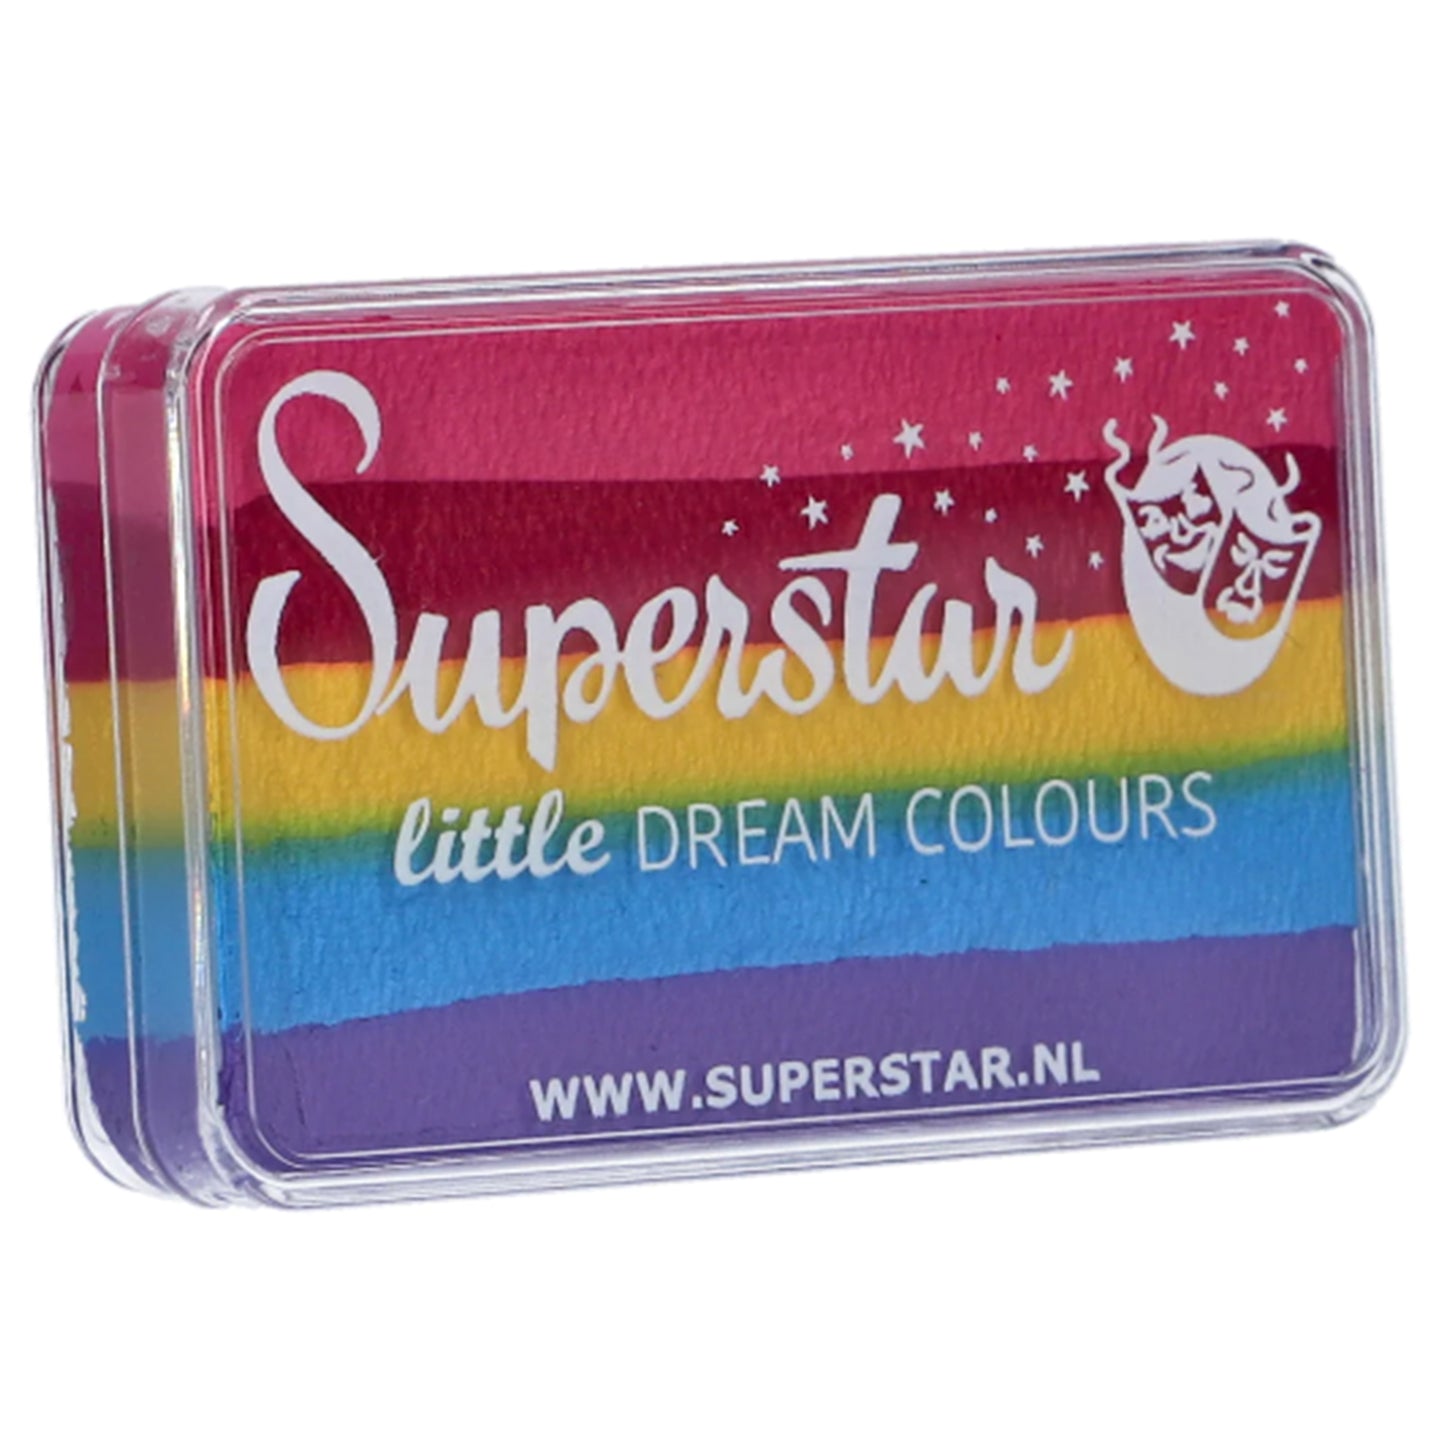 Superstar Little Dream Colours Rainbow Cake - Little Rainbow (30 gm)